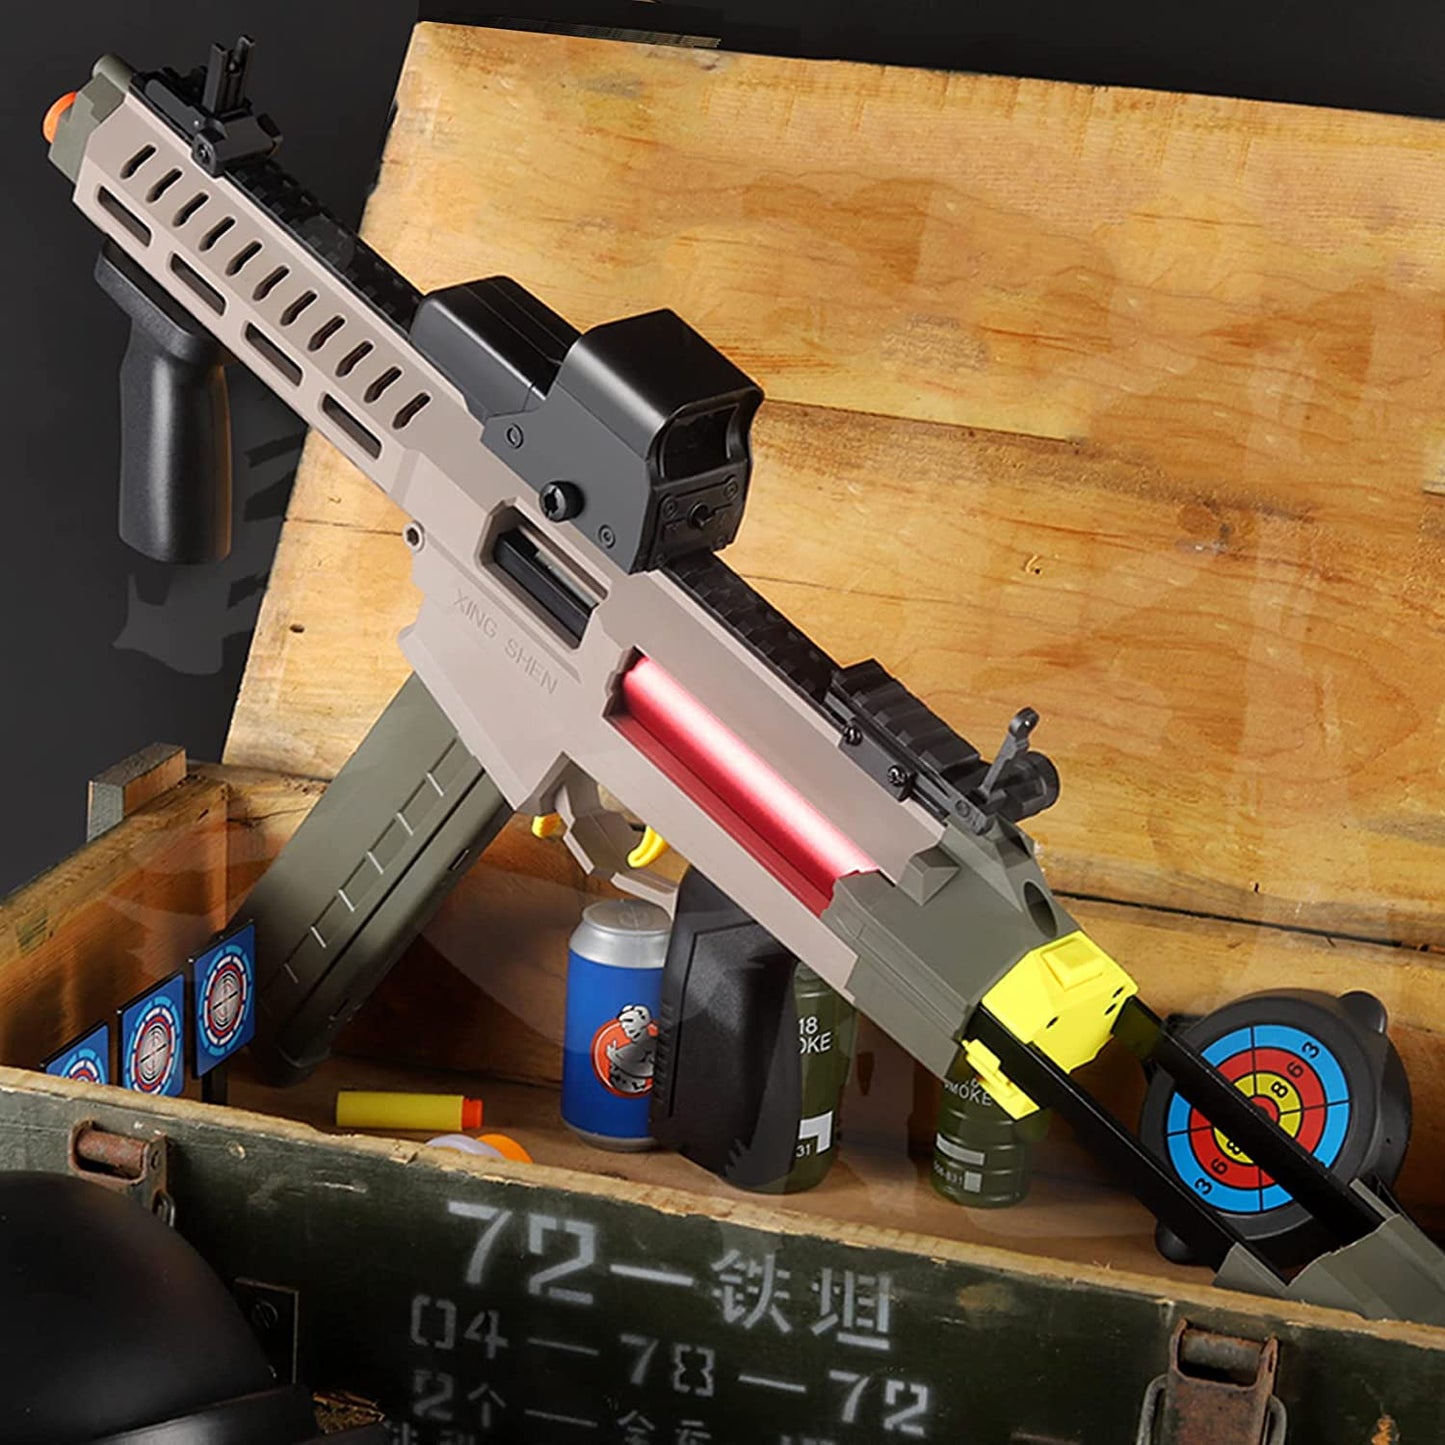 EVAソフト弾丸 SCAR サブマシンガン 短機関銃 ライフル おもちゃ銃